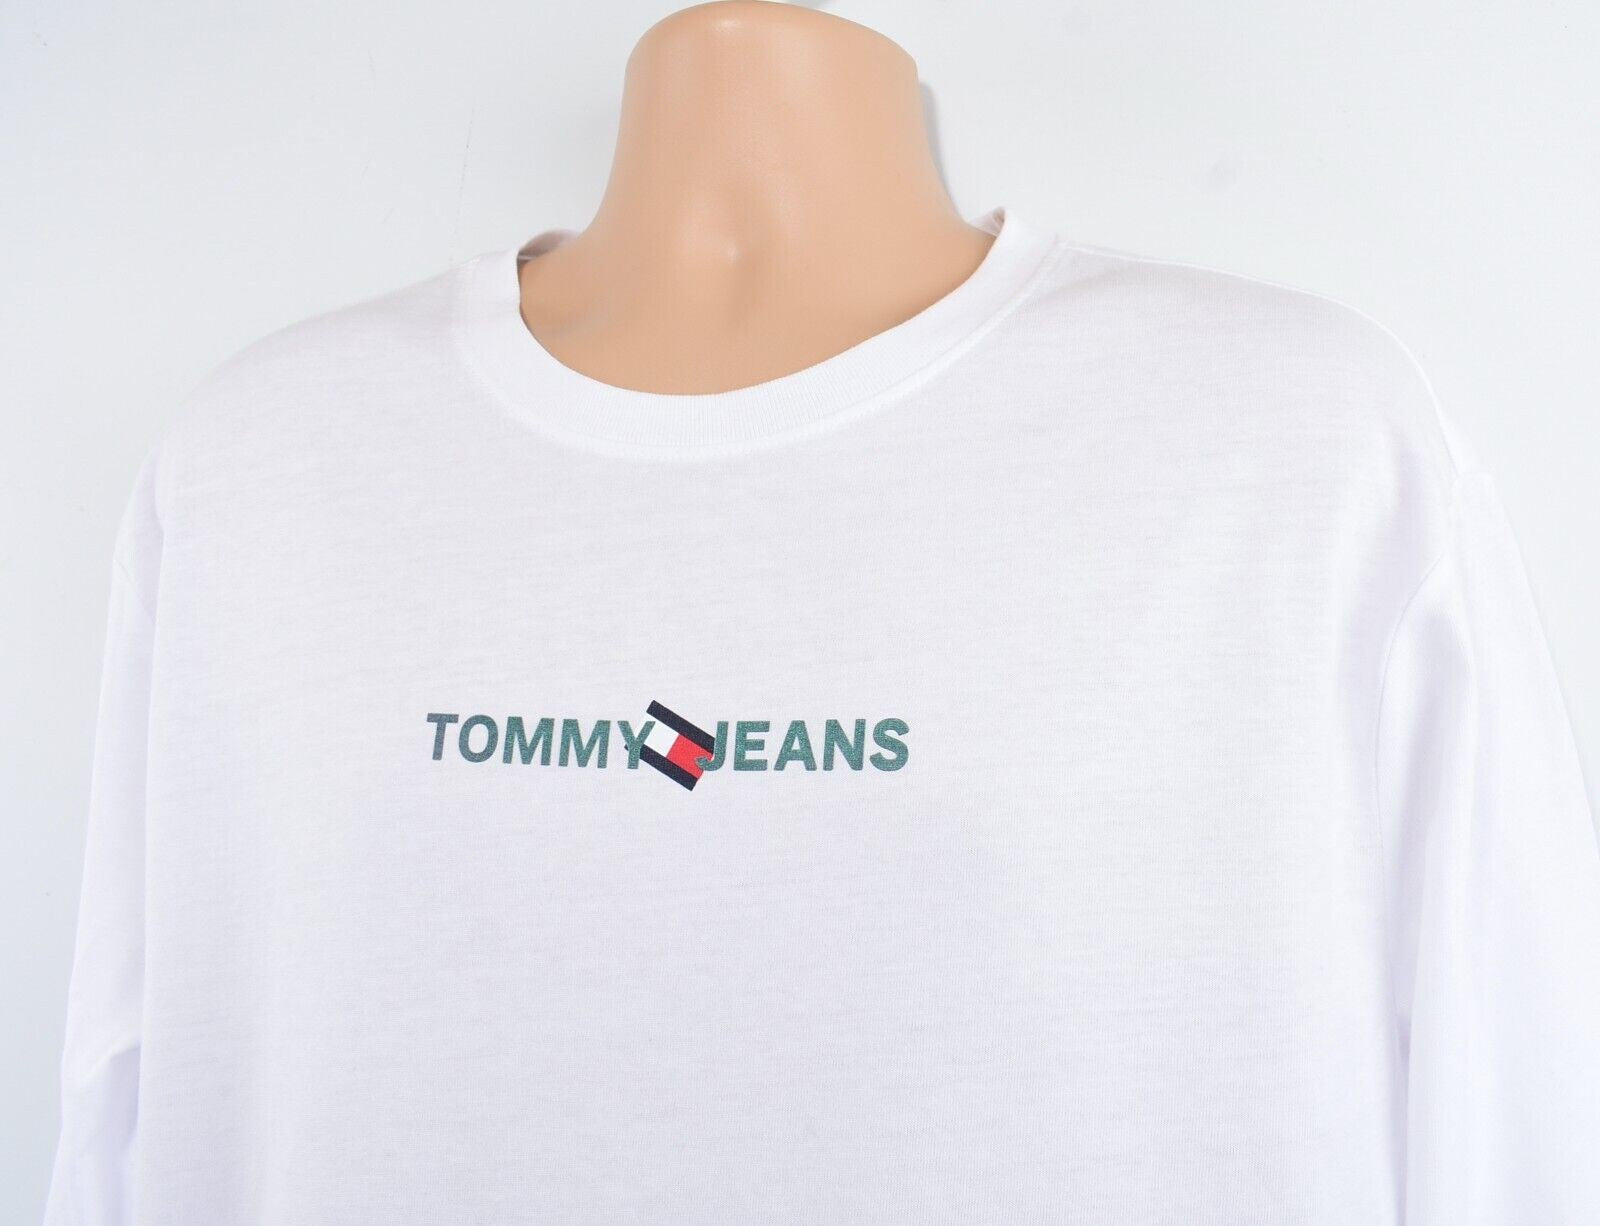 TOMMY HILFIGER Men's Long Sleeve Front & Back Logo T-shirt, White, size LARGE